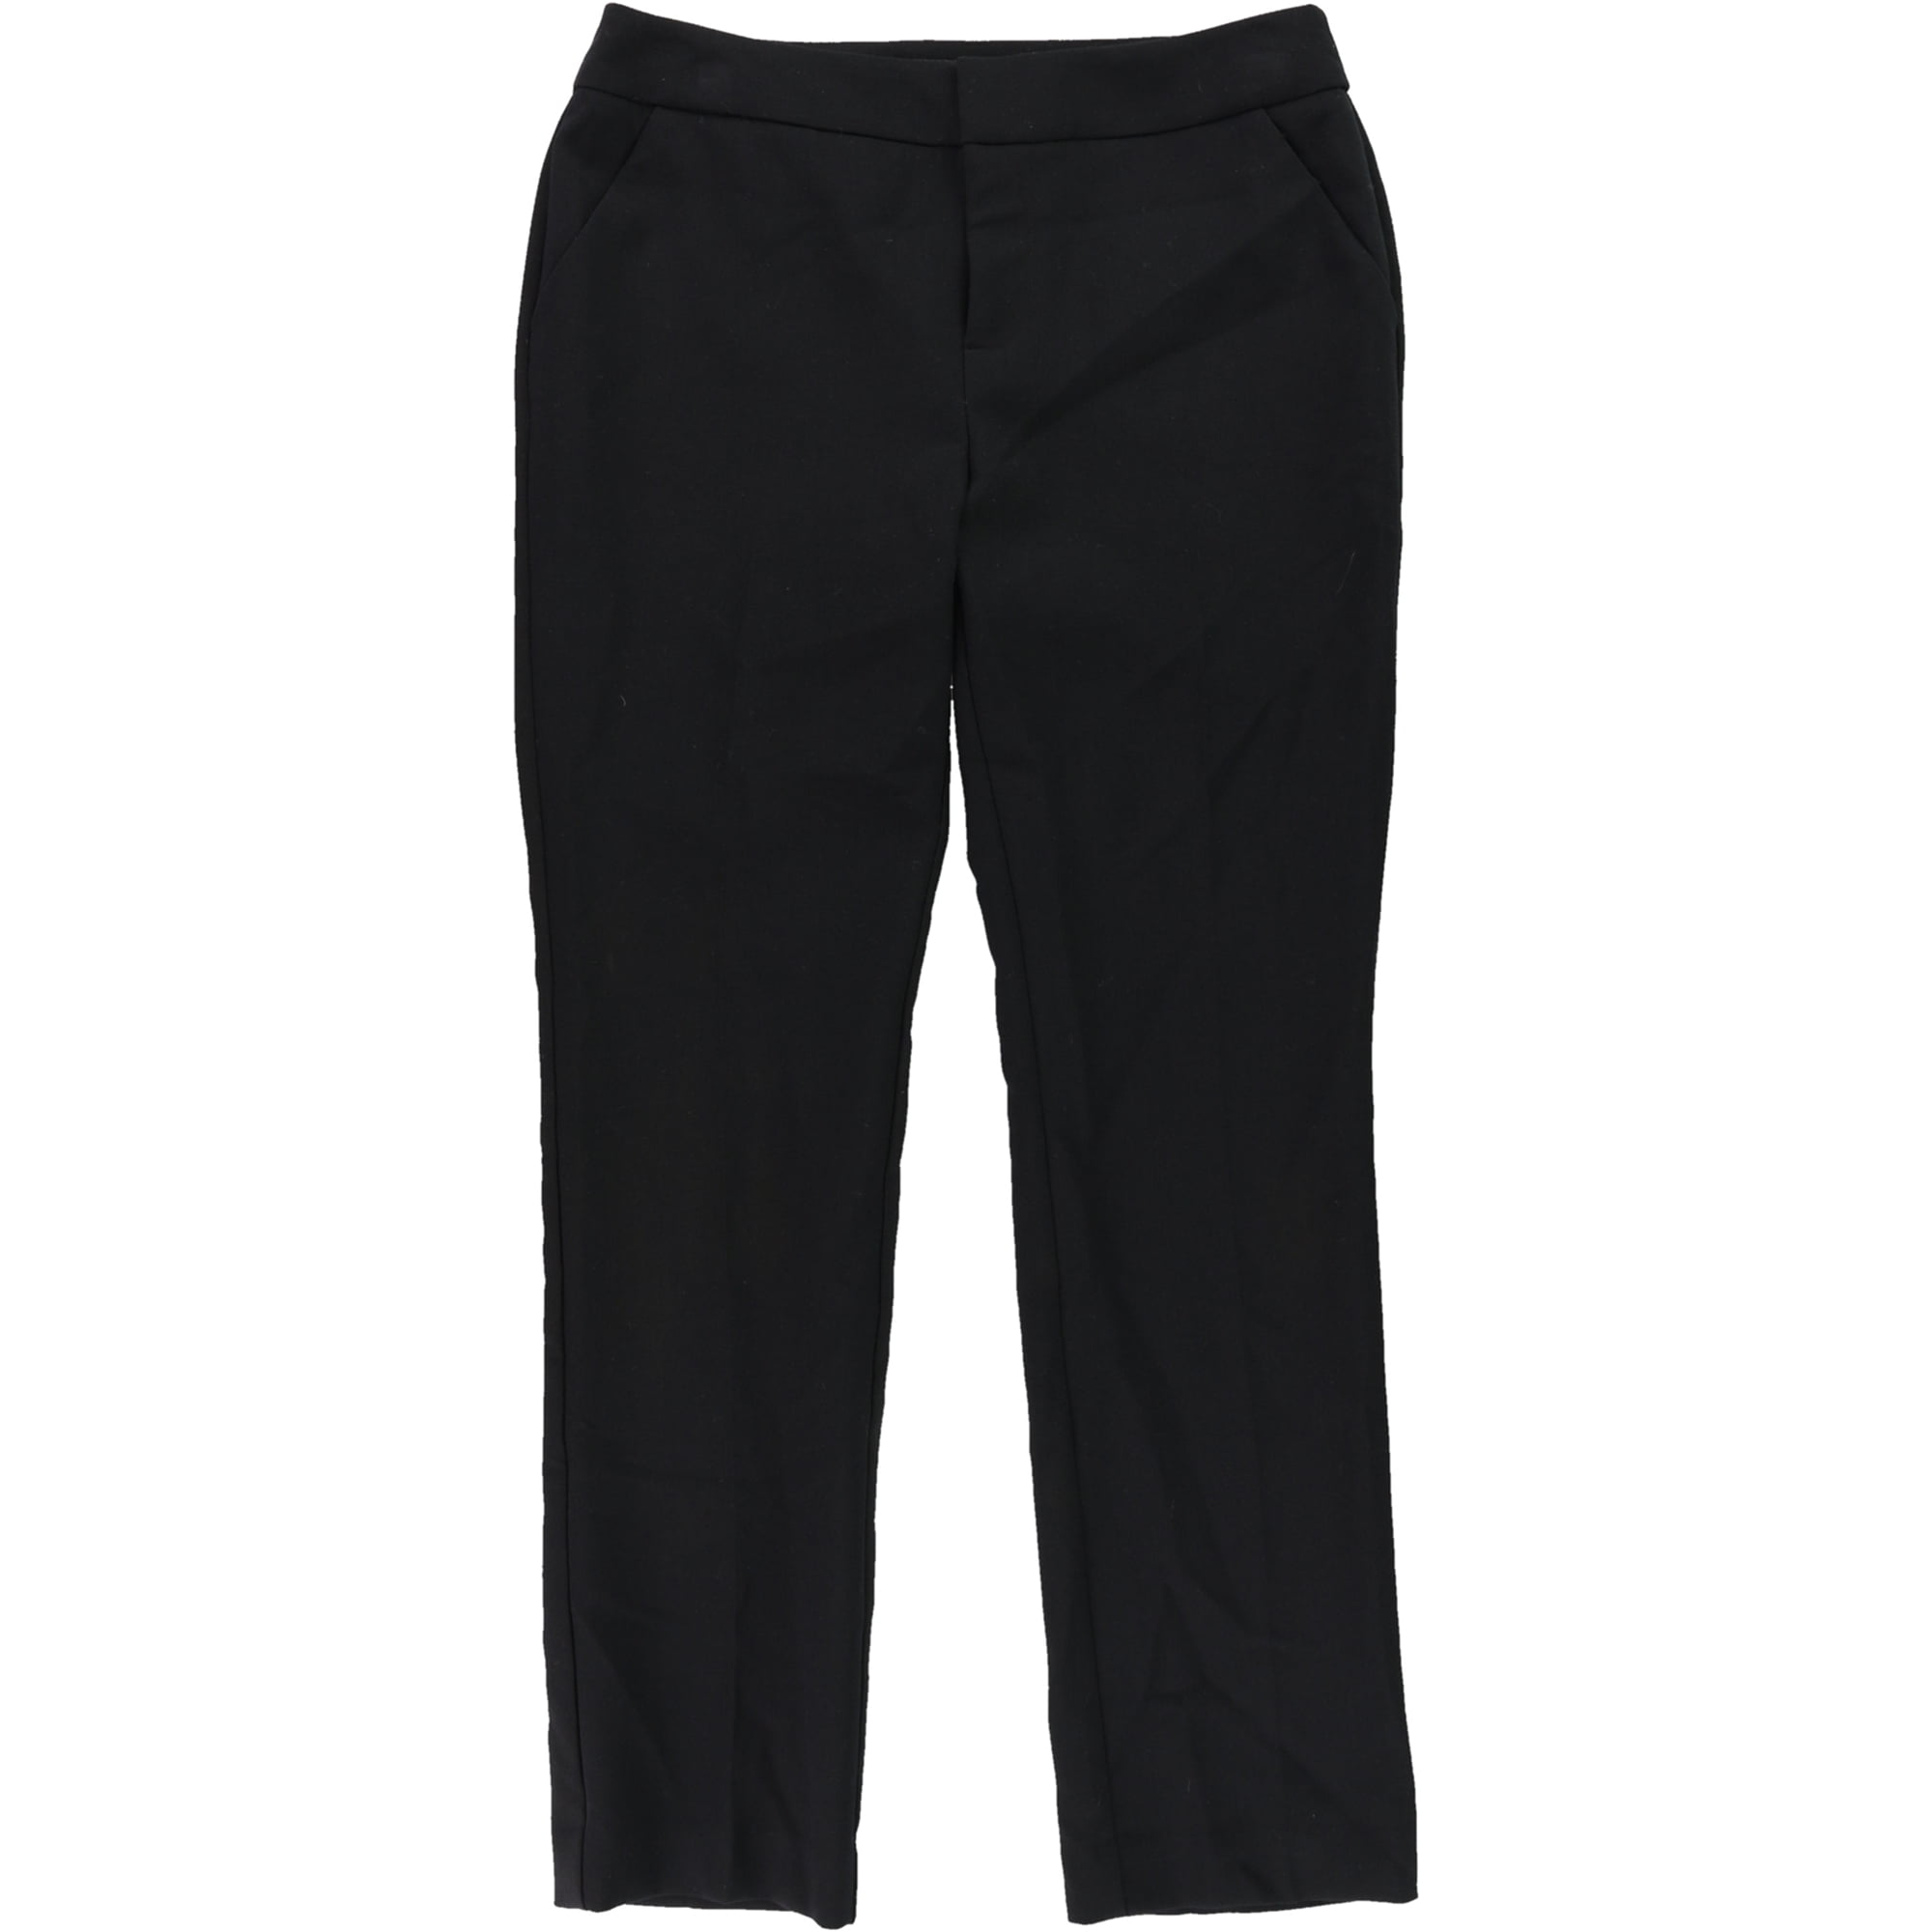 Ed Garments MenS 2588 Easy Fit Hidden Waistband Dress Pants Black 54-30